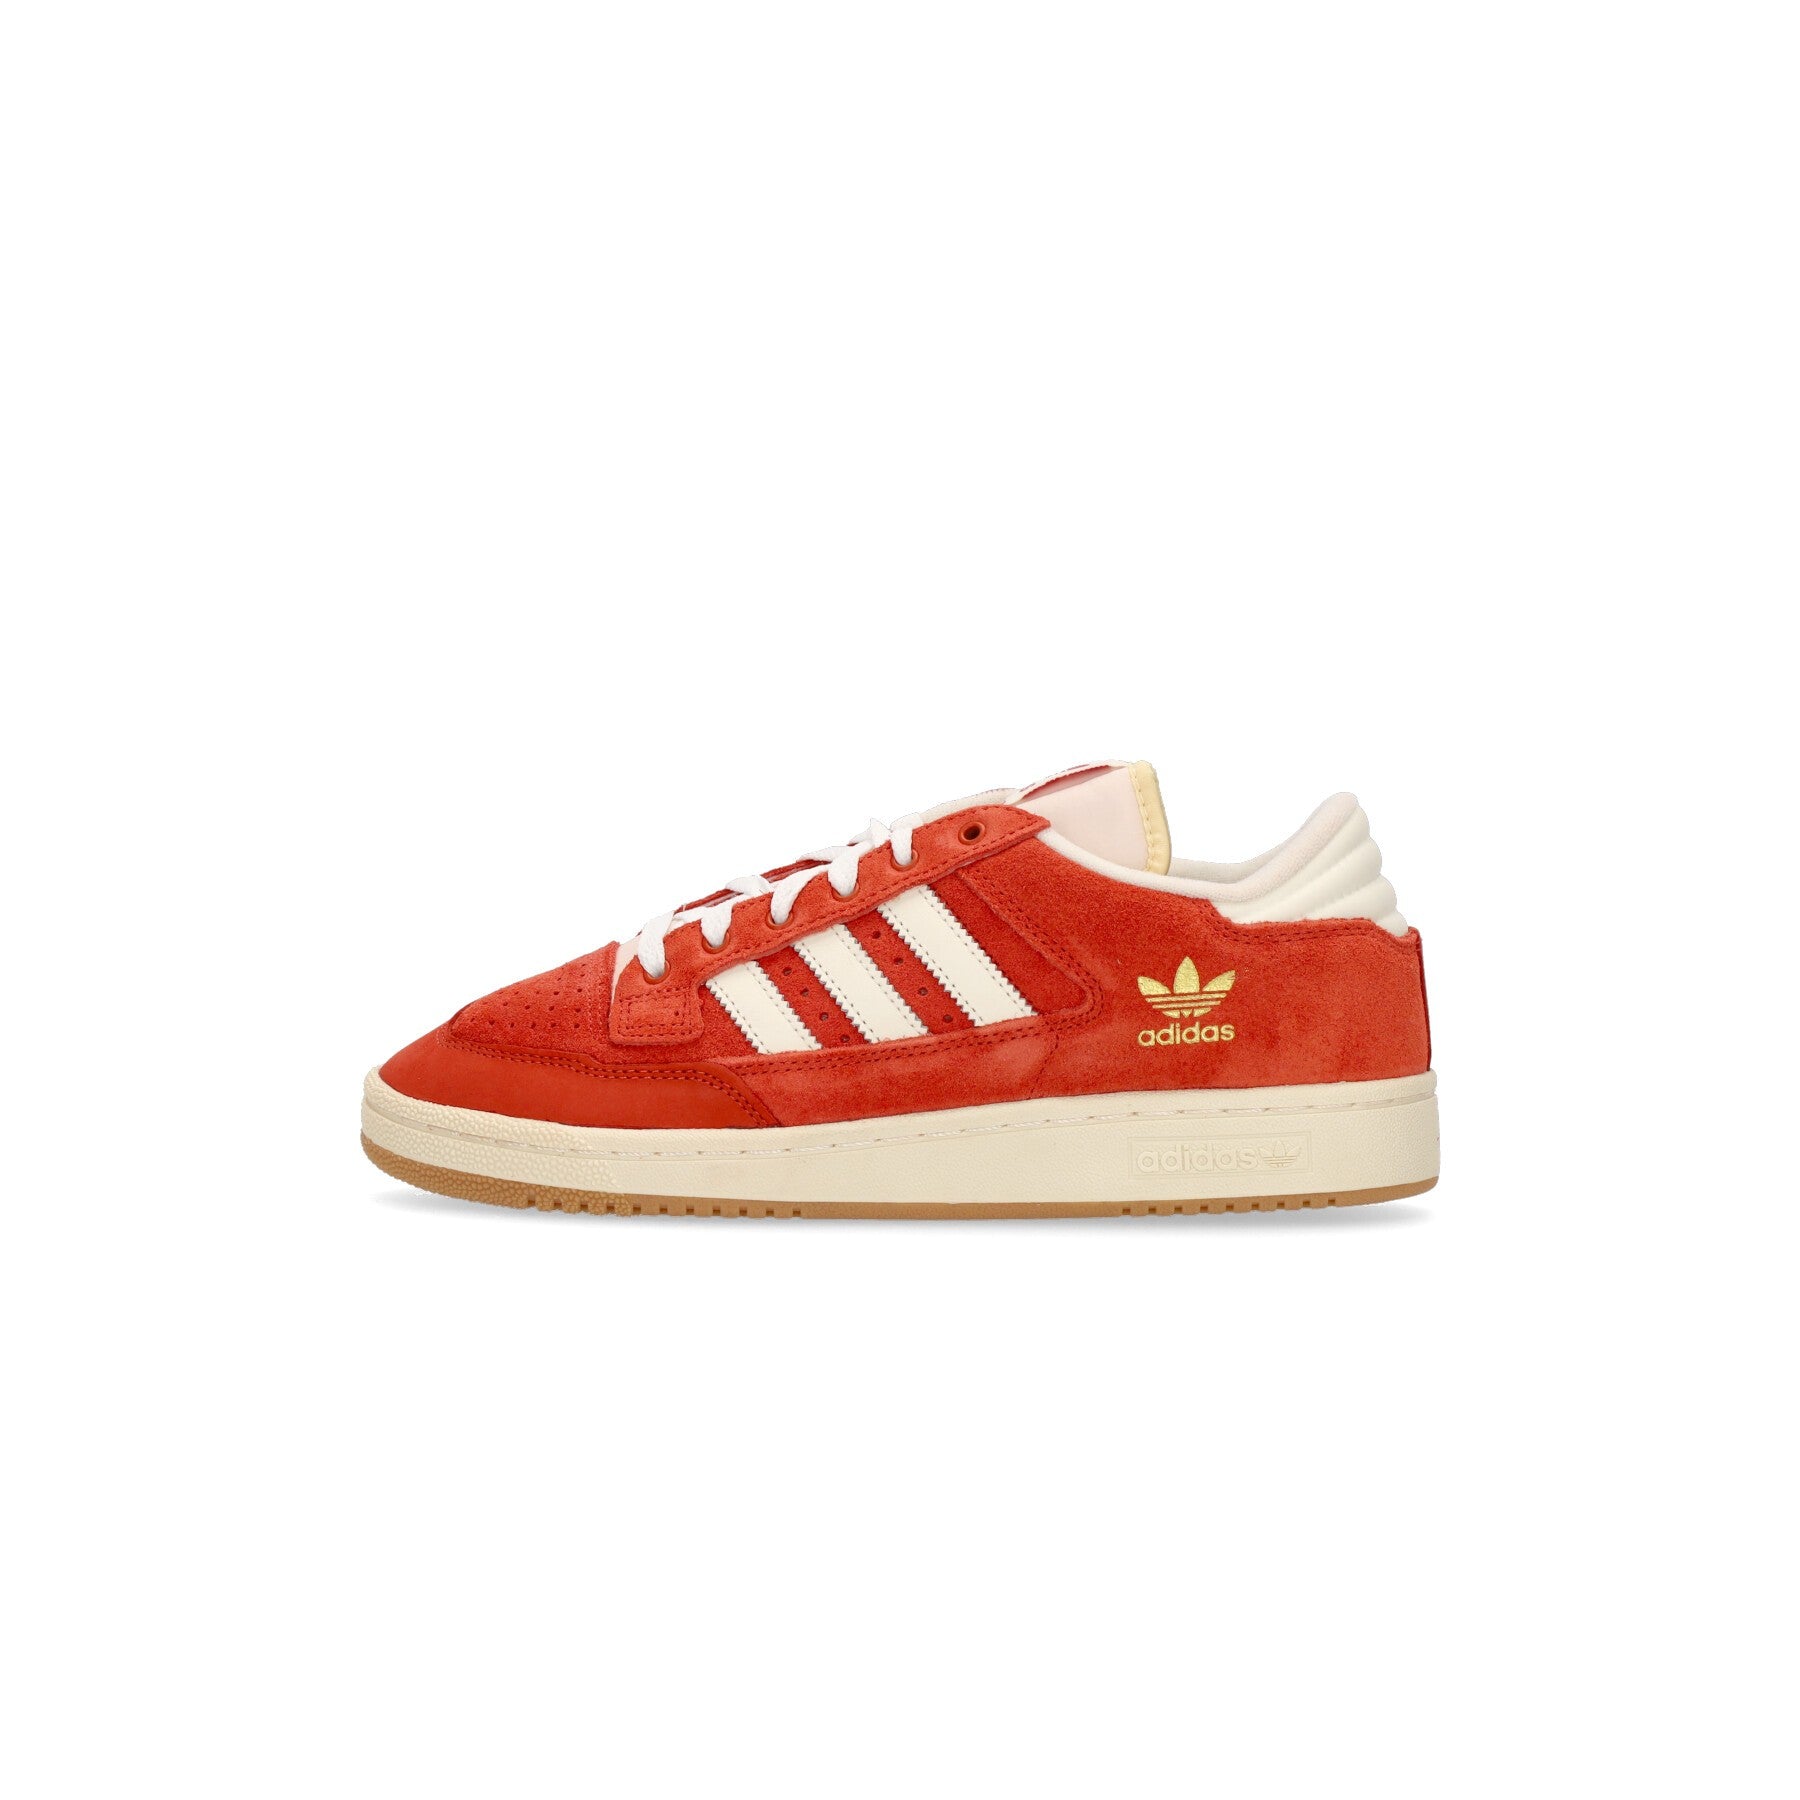 Adidas, Scarpa Bassa Uomo Centennial 85 Low, Red/cream White/off White